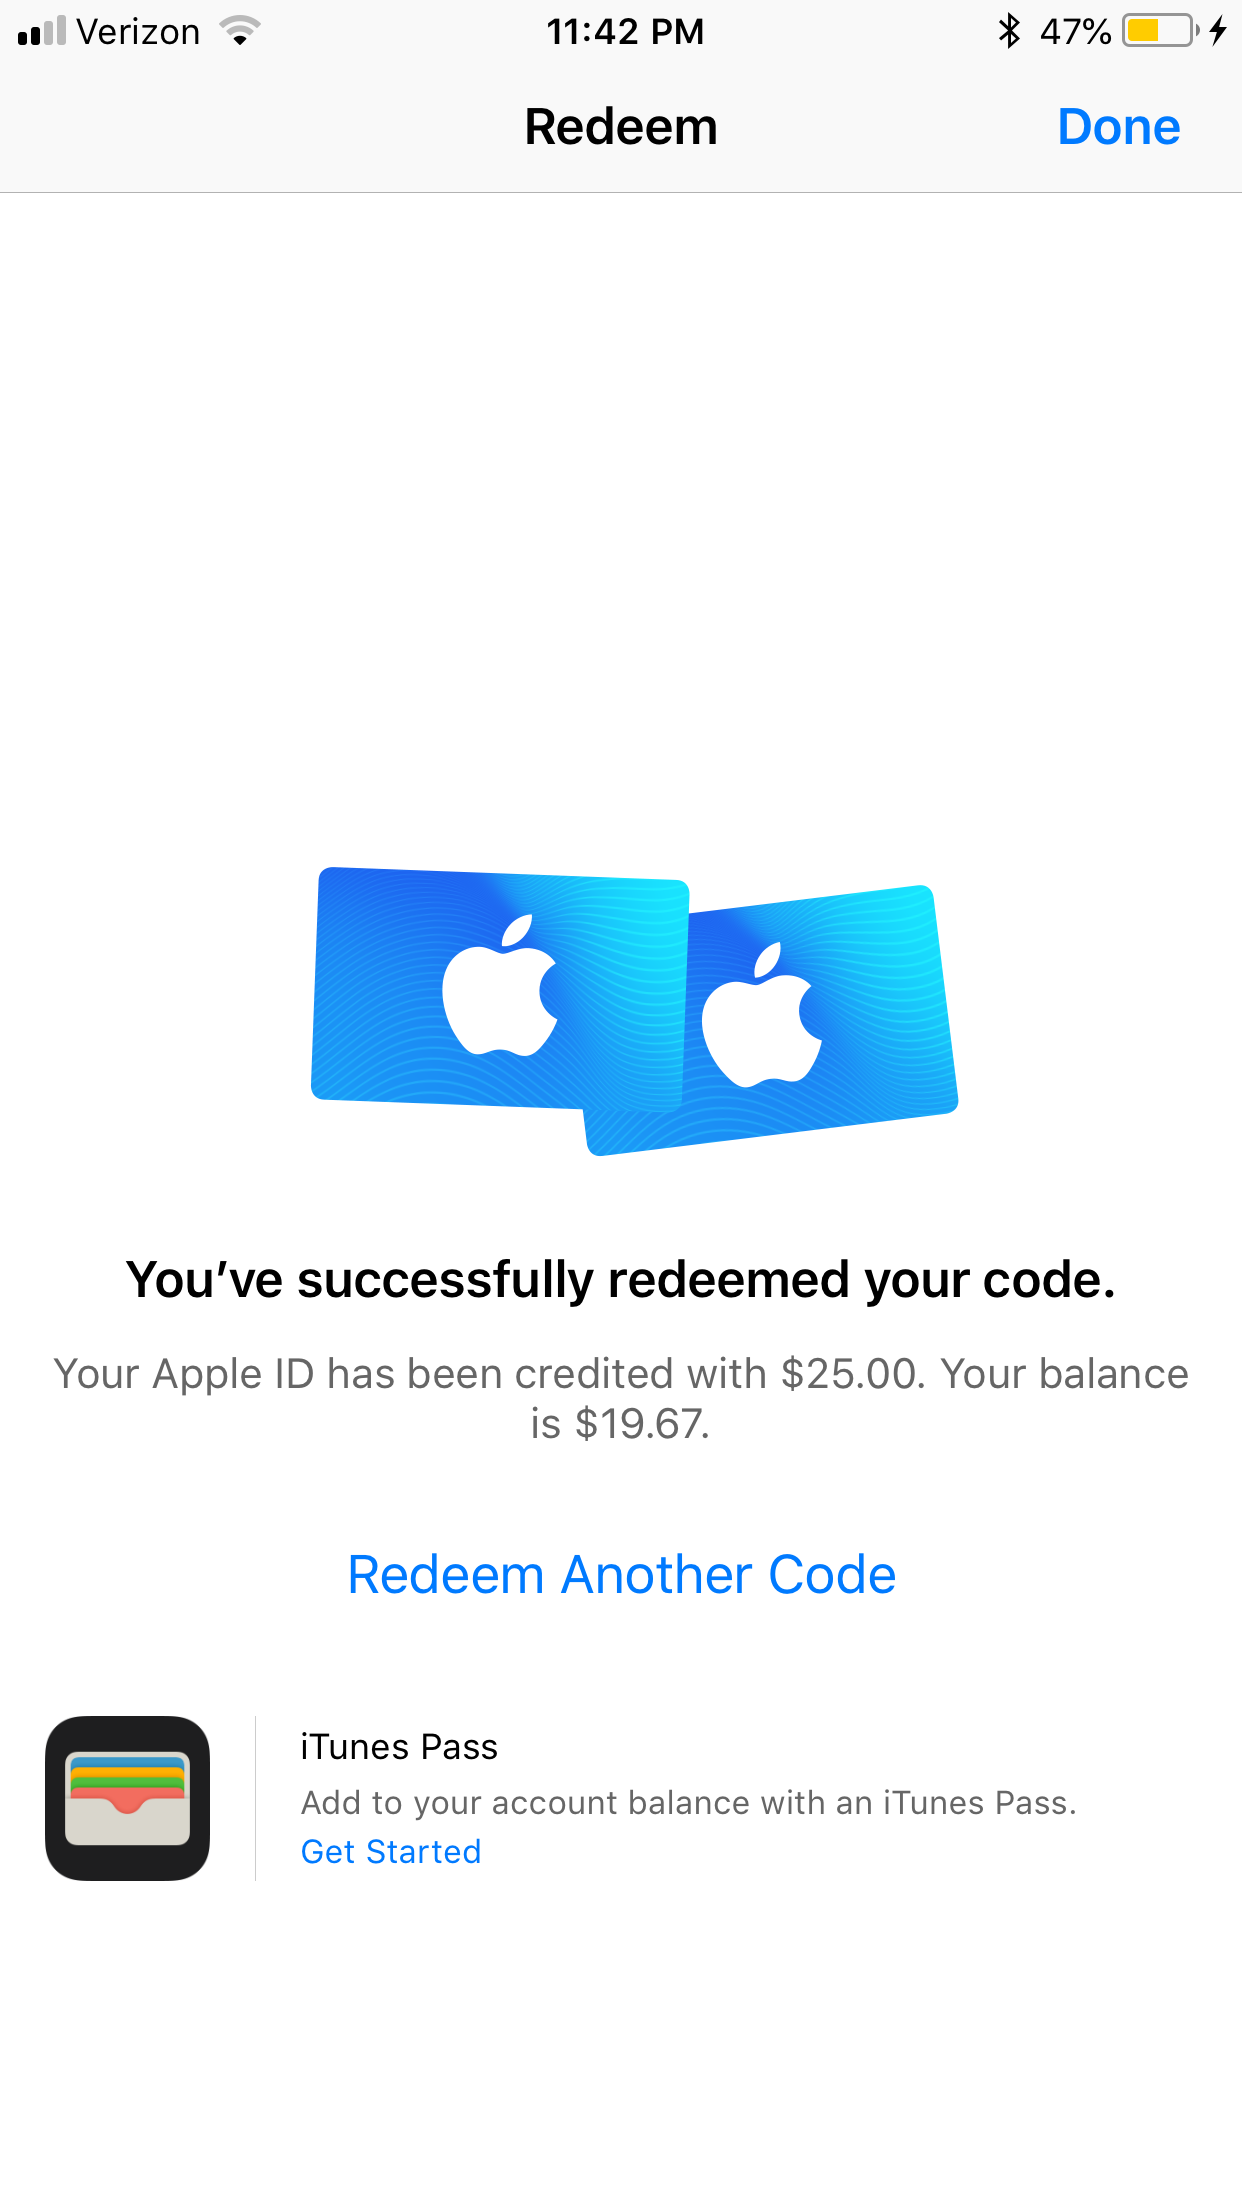 Apple Gift Card $25